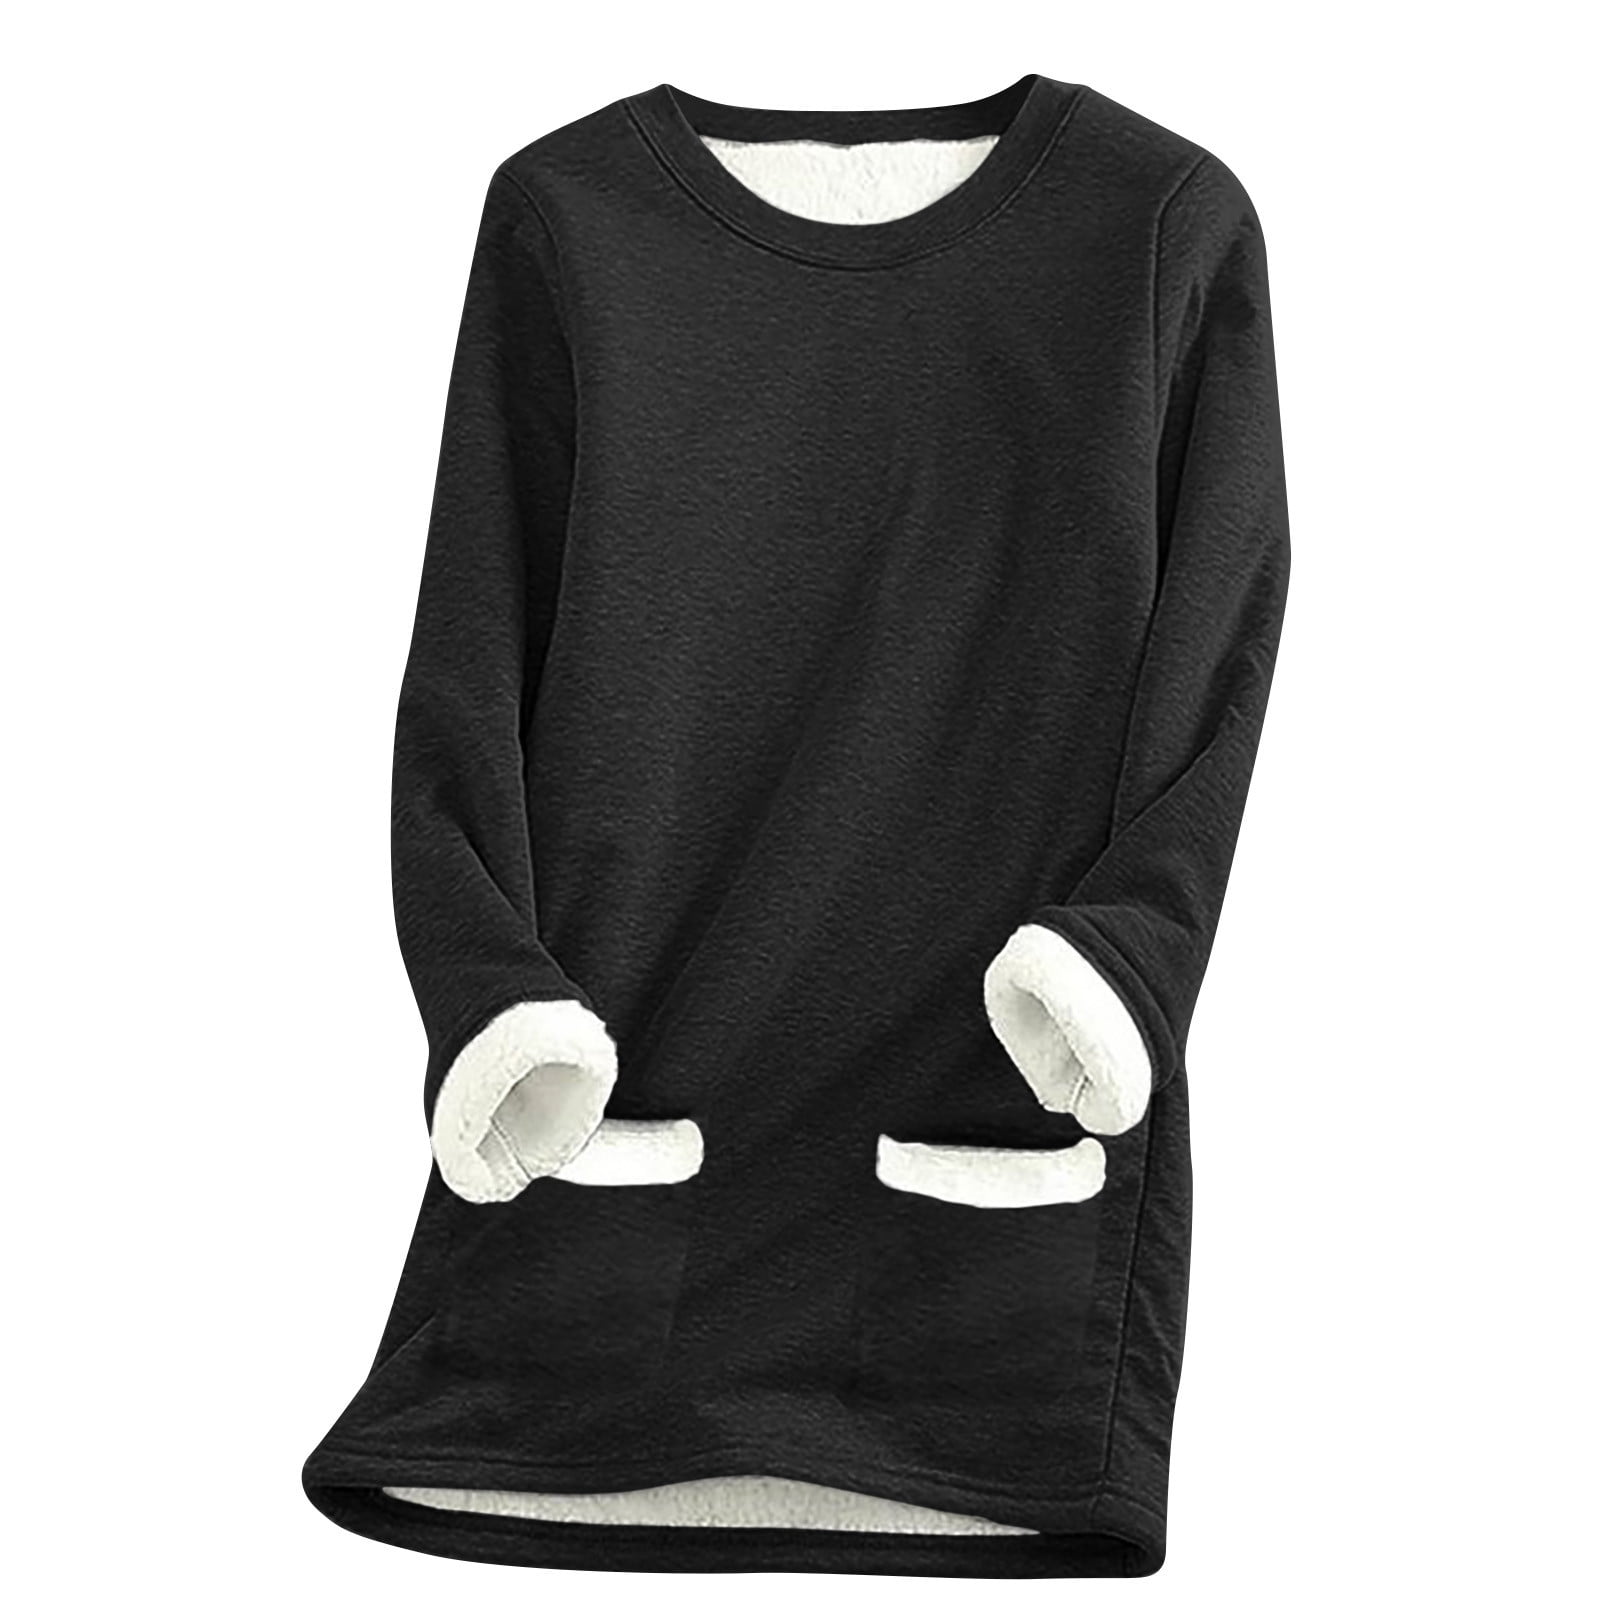 asdoklhq Fall 3/4 Sleeve Shirts for Women Women's Round Neck Pocket  Thickened Plush Warm Long Sleeve Tops Black L